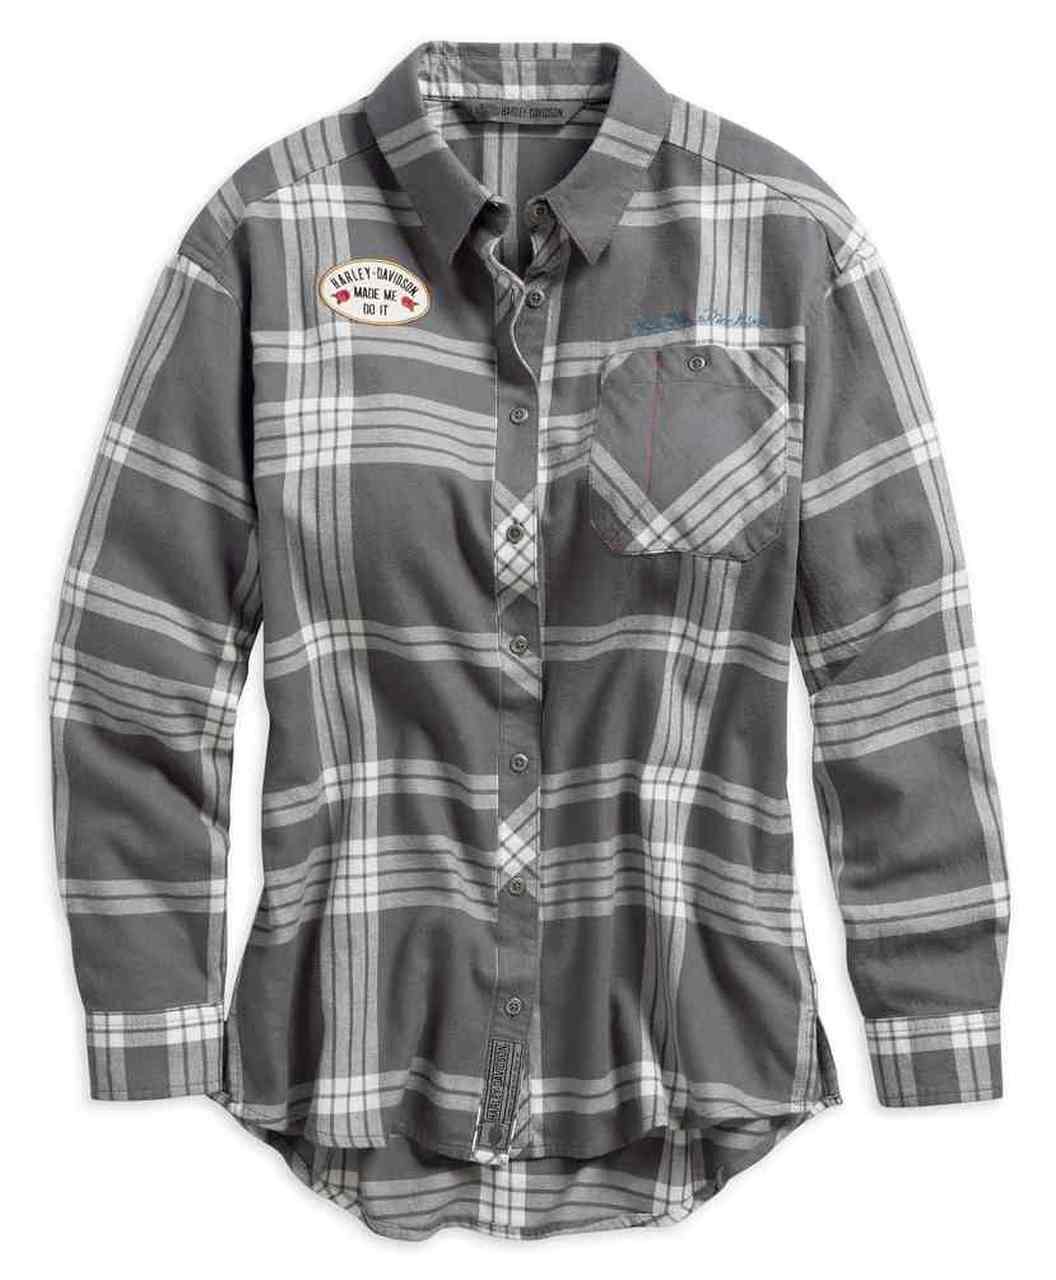 Harley-Davidson® Women's Eagle Graphic Plaid Long Sleeve Shirt, Gray